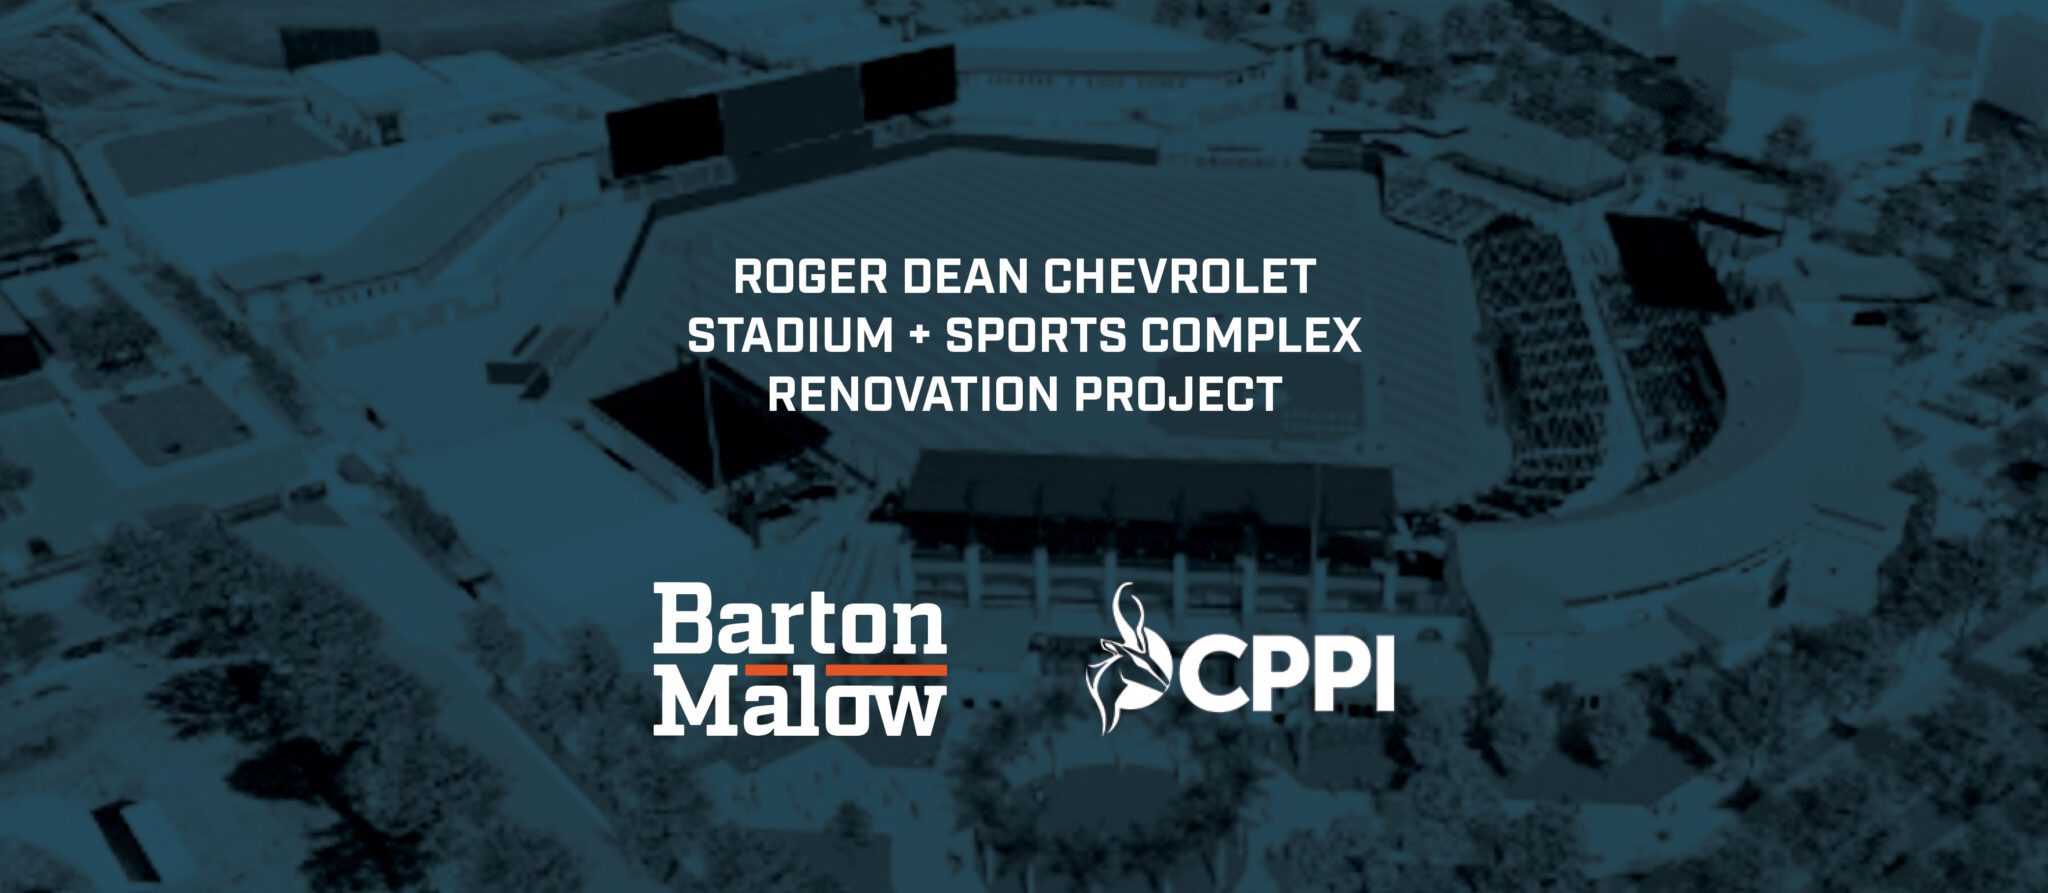 Roger Dean Chevrolet Stadium + Sports Complex Renovation